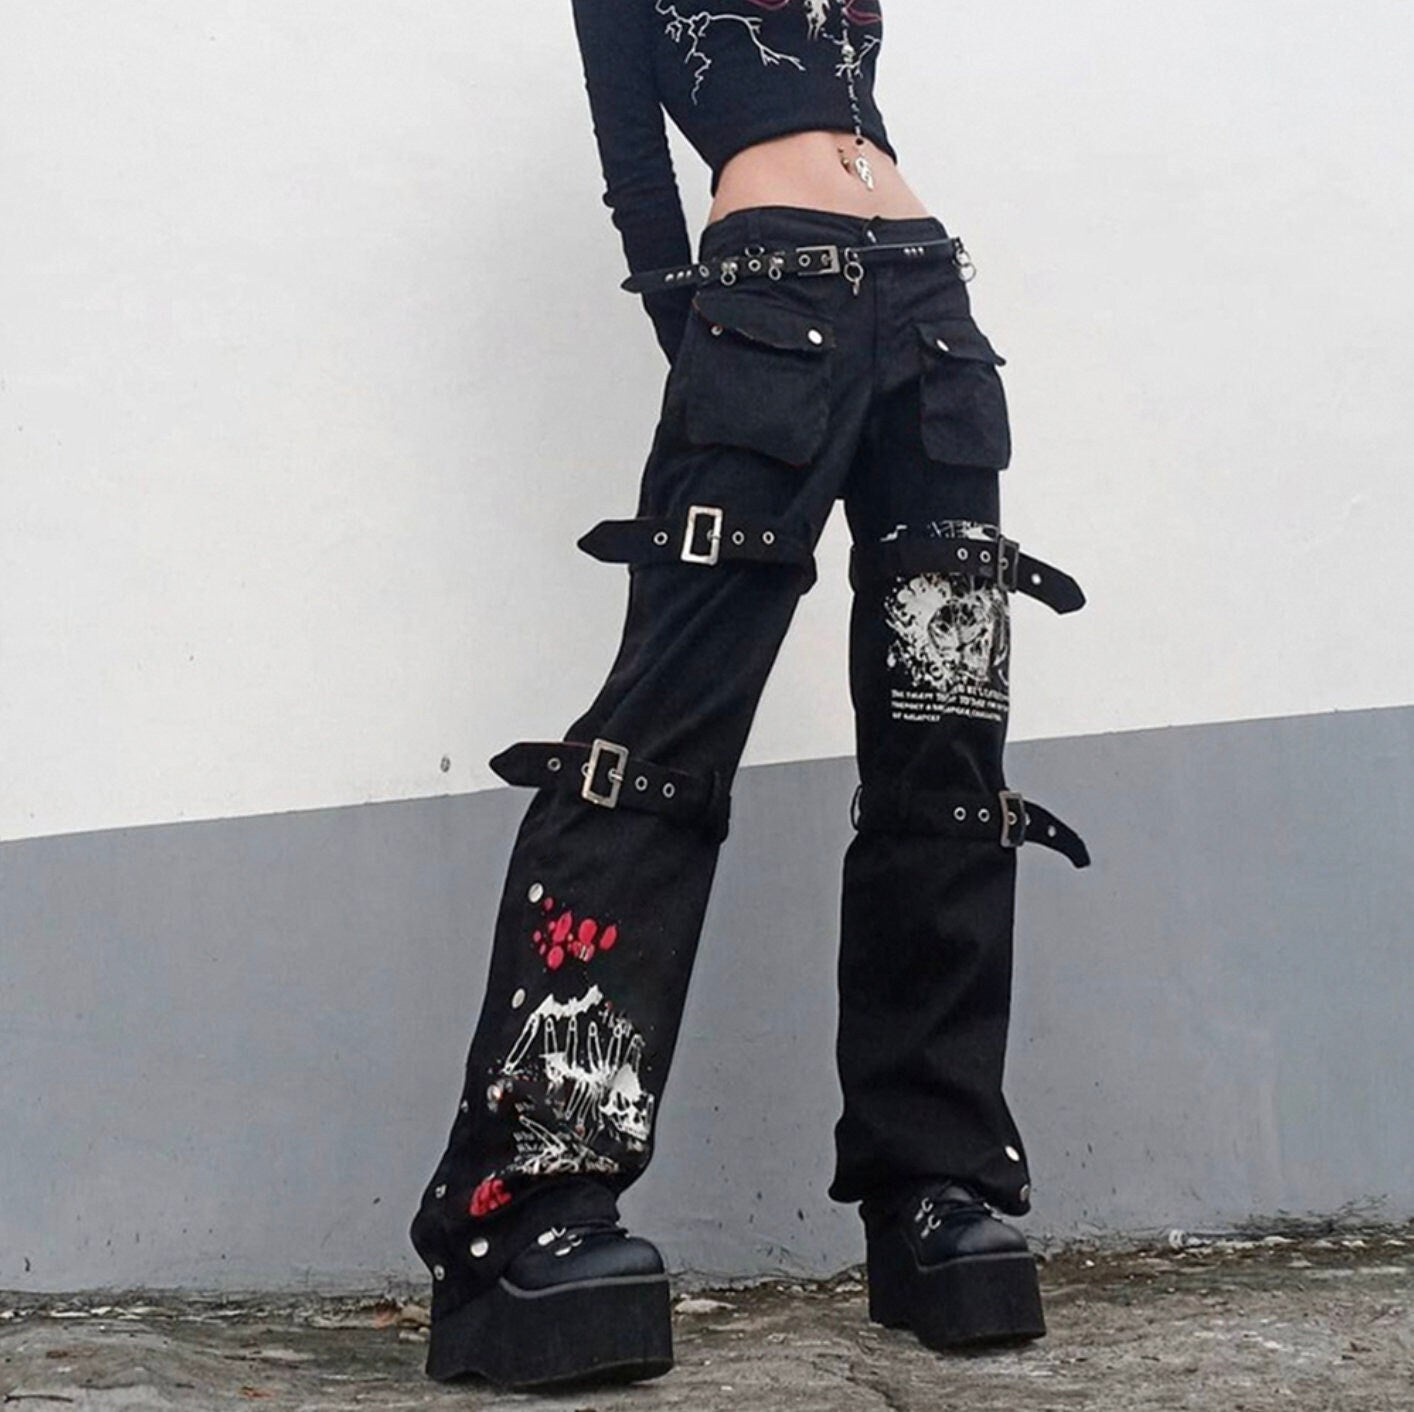 Womens Gothic Emo Alt Cargo Pants skater edgy alt Baggy Jeans mall goth Goth Punk Black Denim Trousers Cyber Y2k Pants Academic Dark Clothes # 201